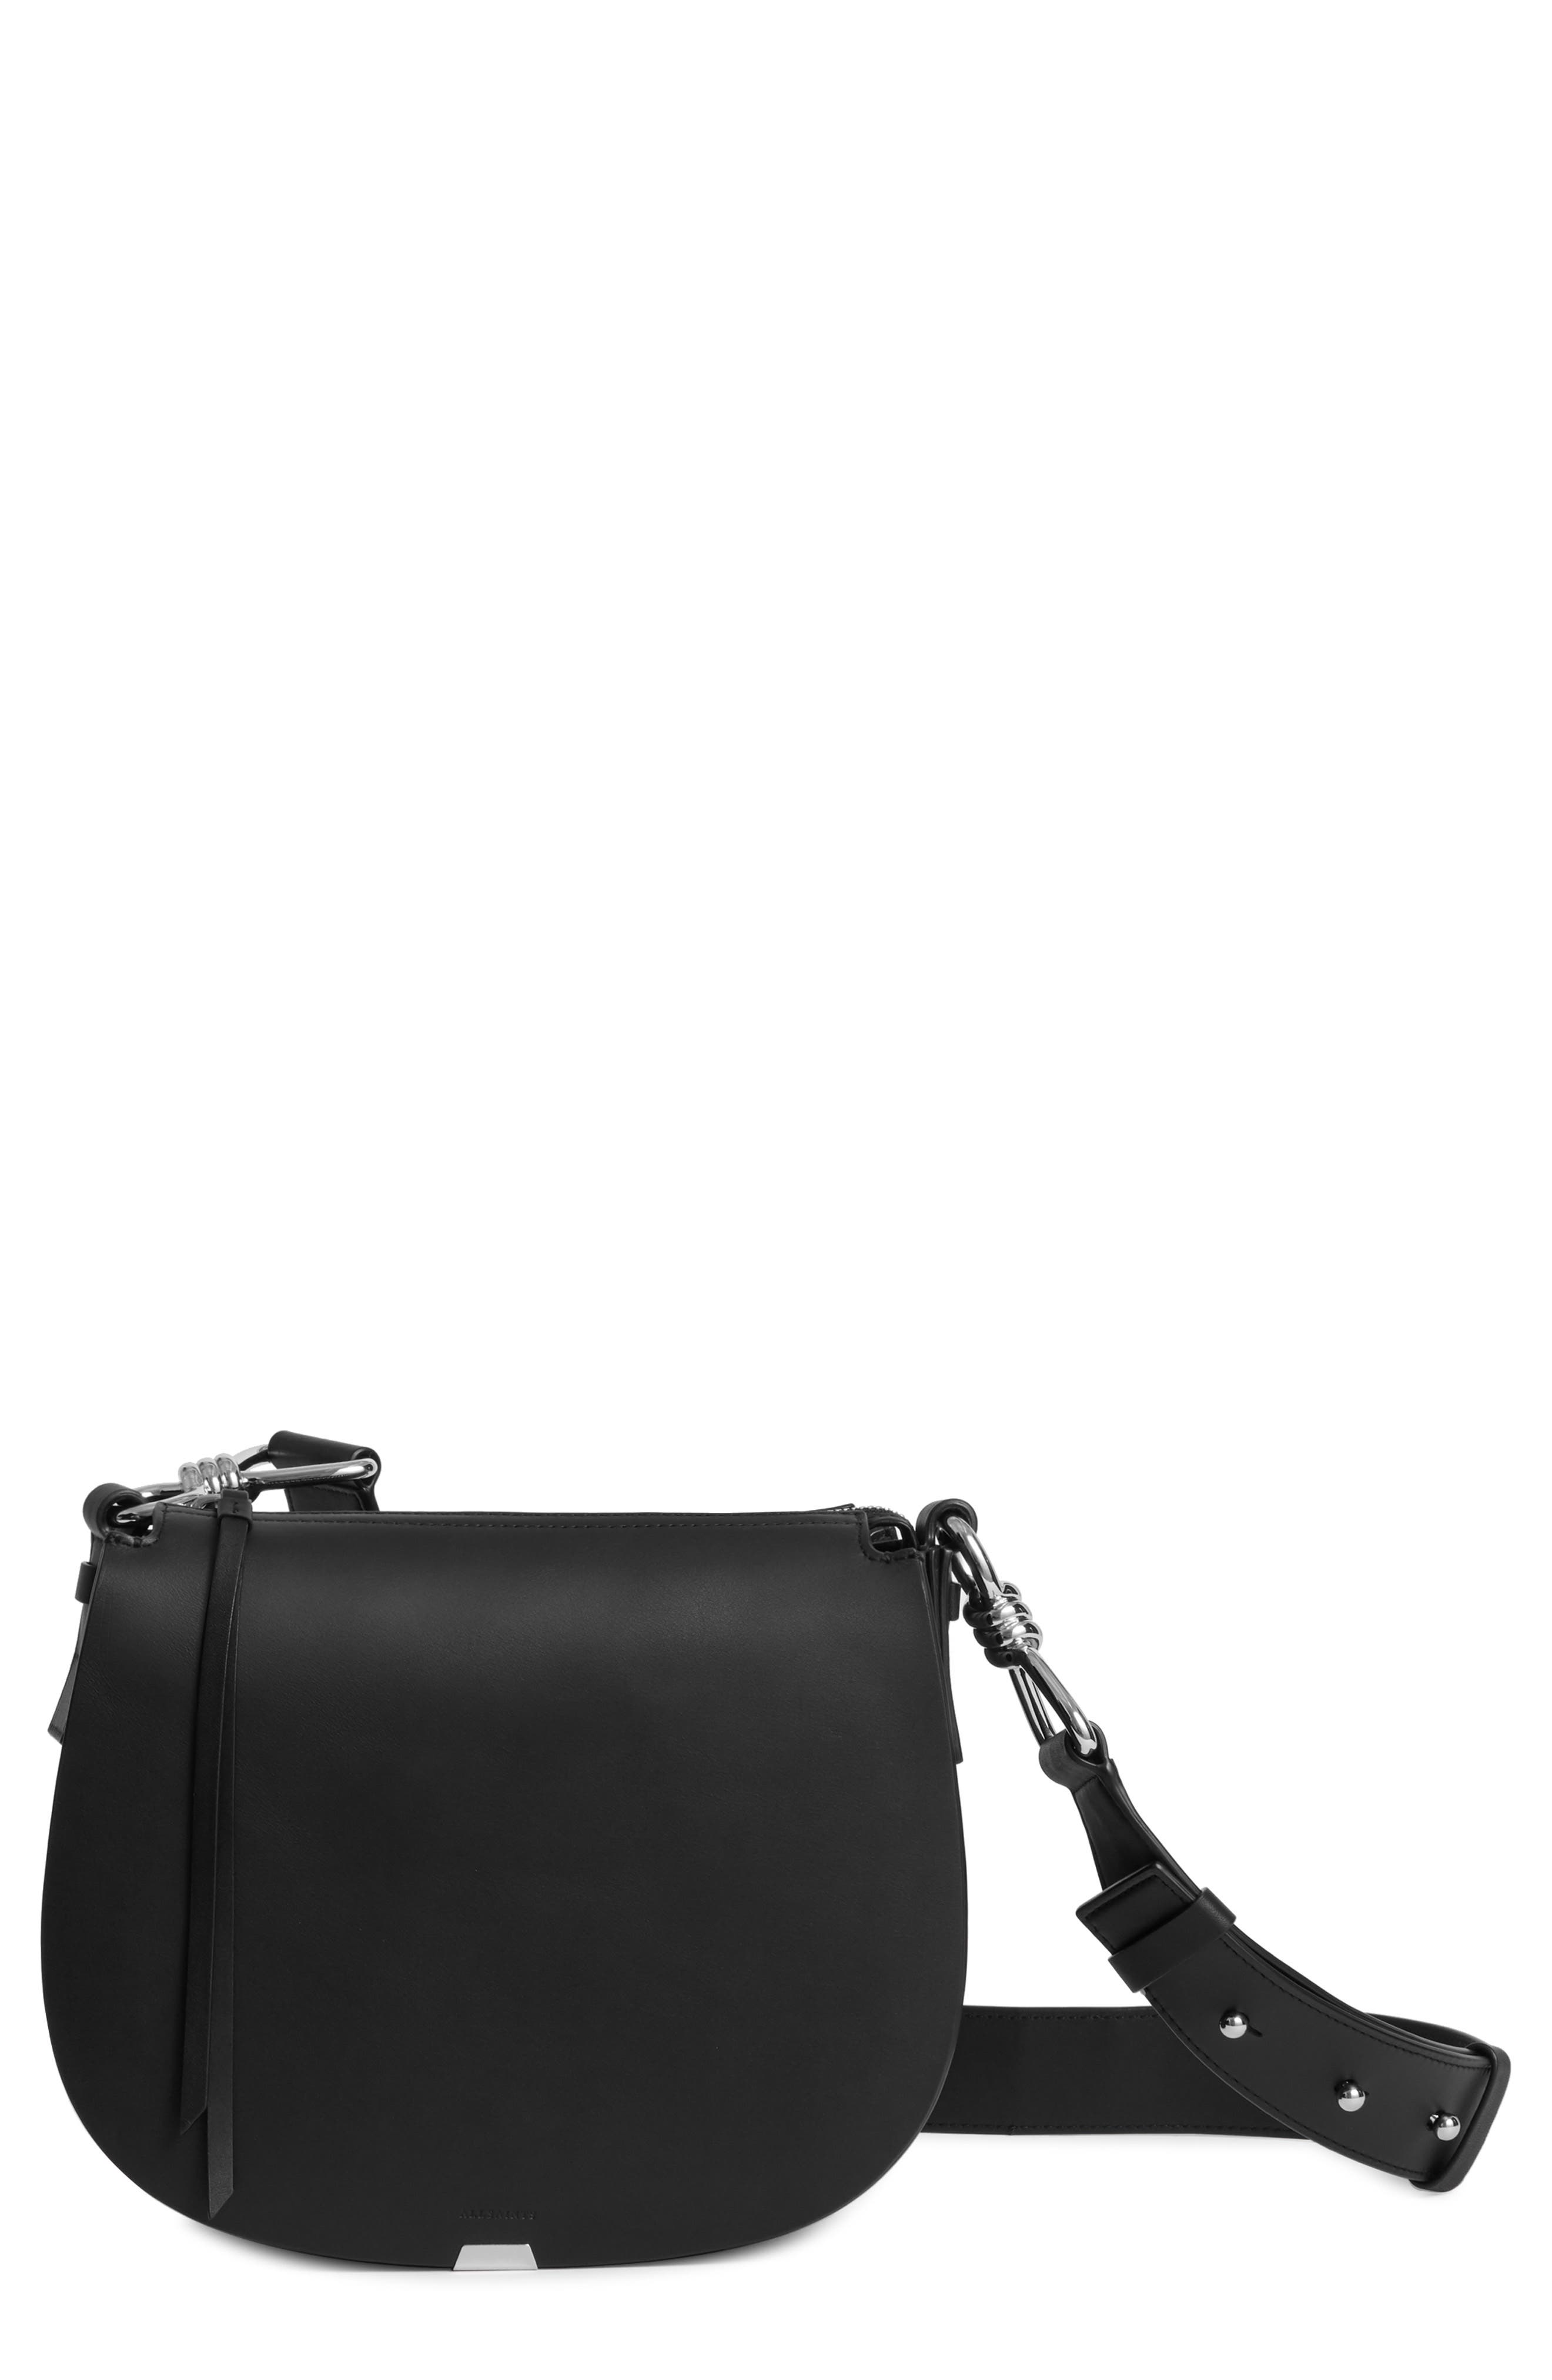 round black leather crossbody bag